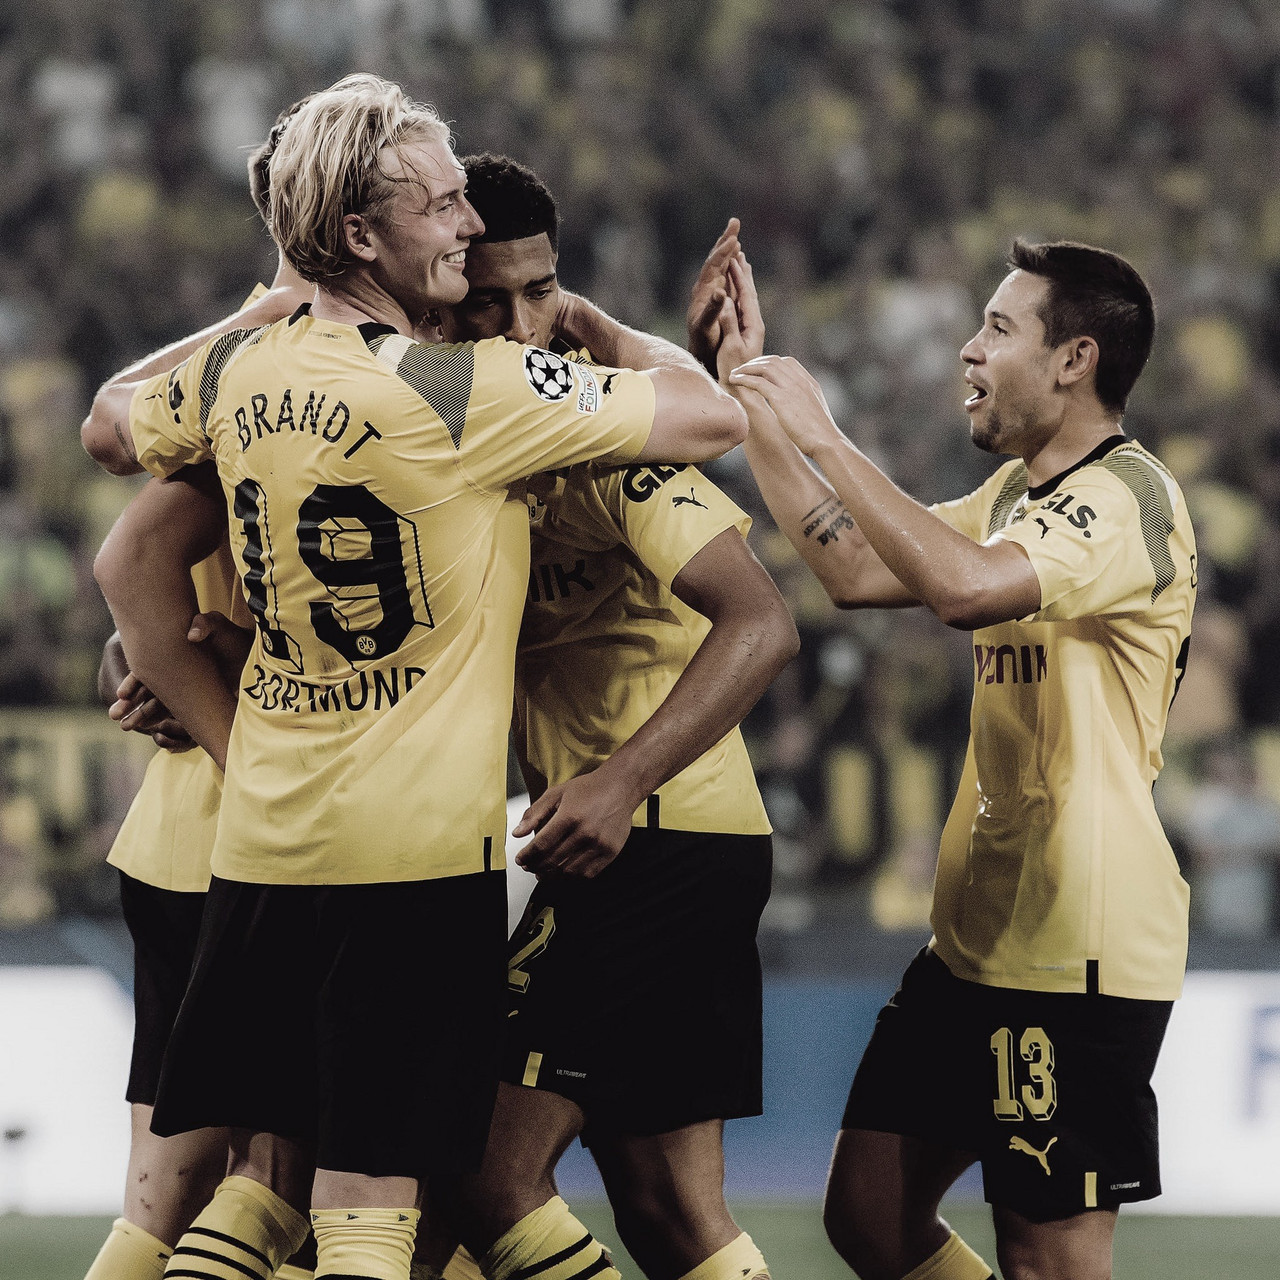 Firme debut del Borussia Dortmund en Champions League